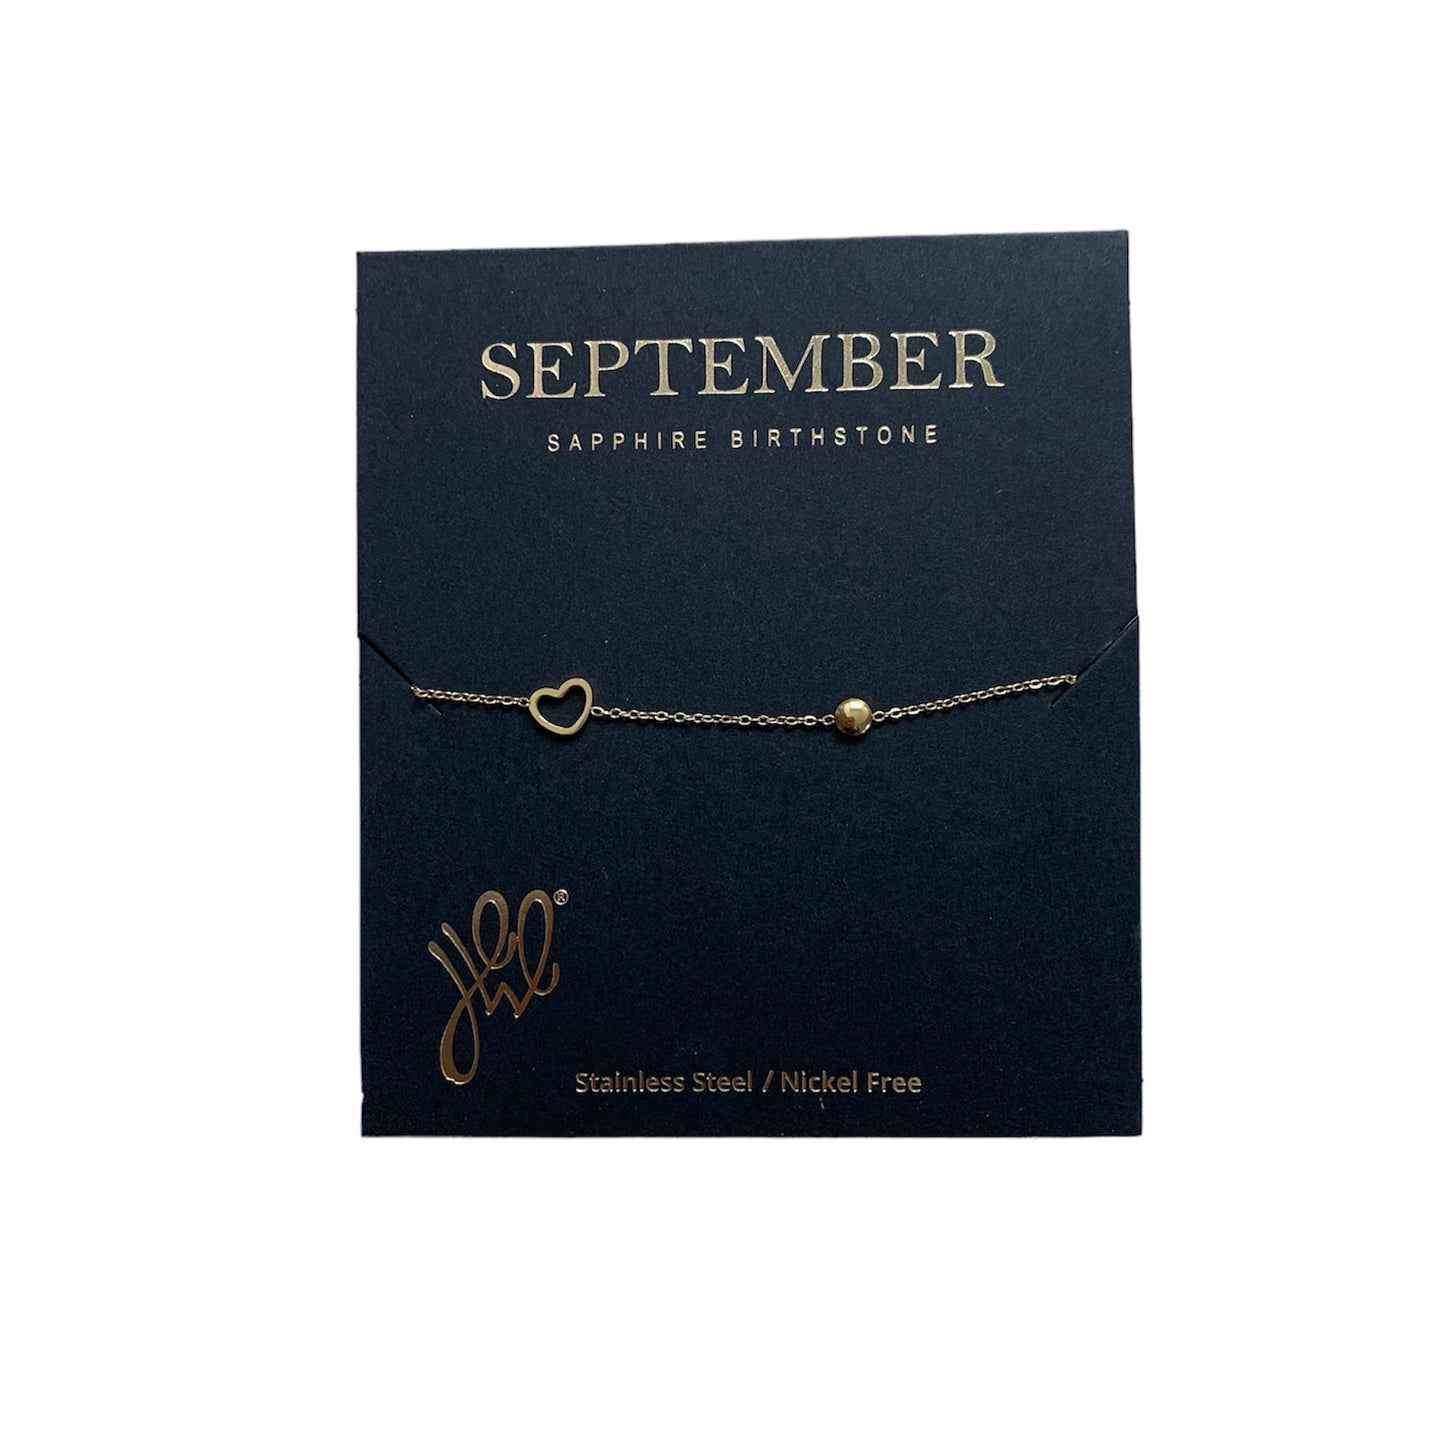 Birthstone armband - September